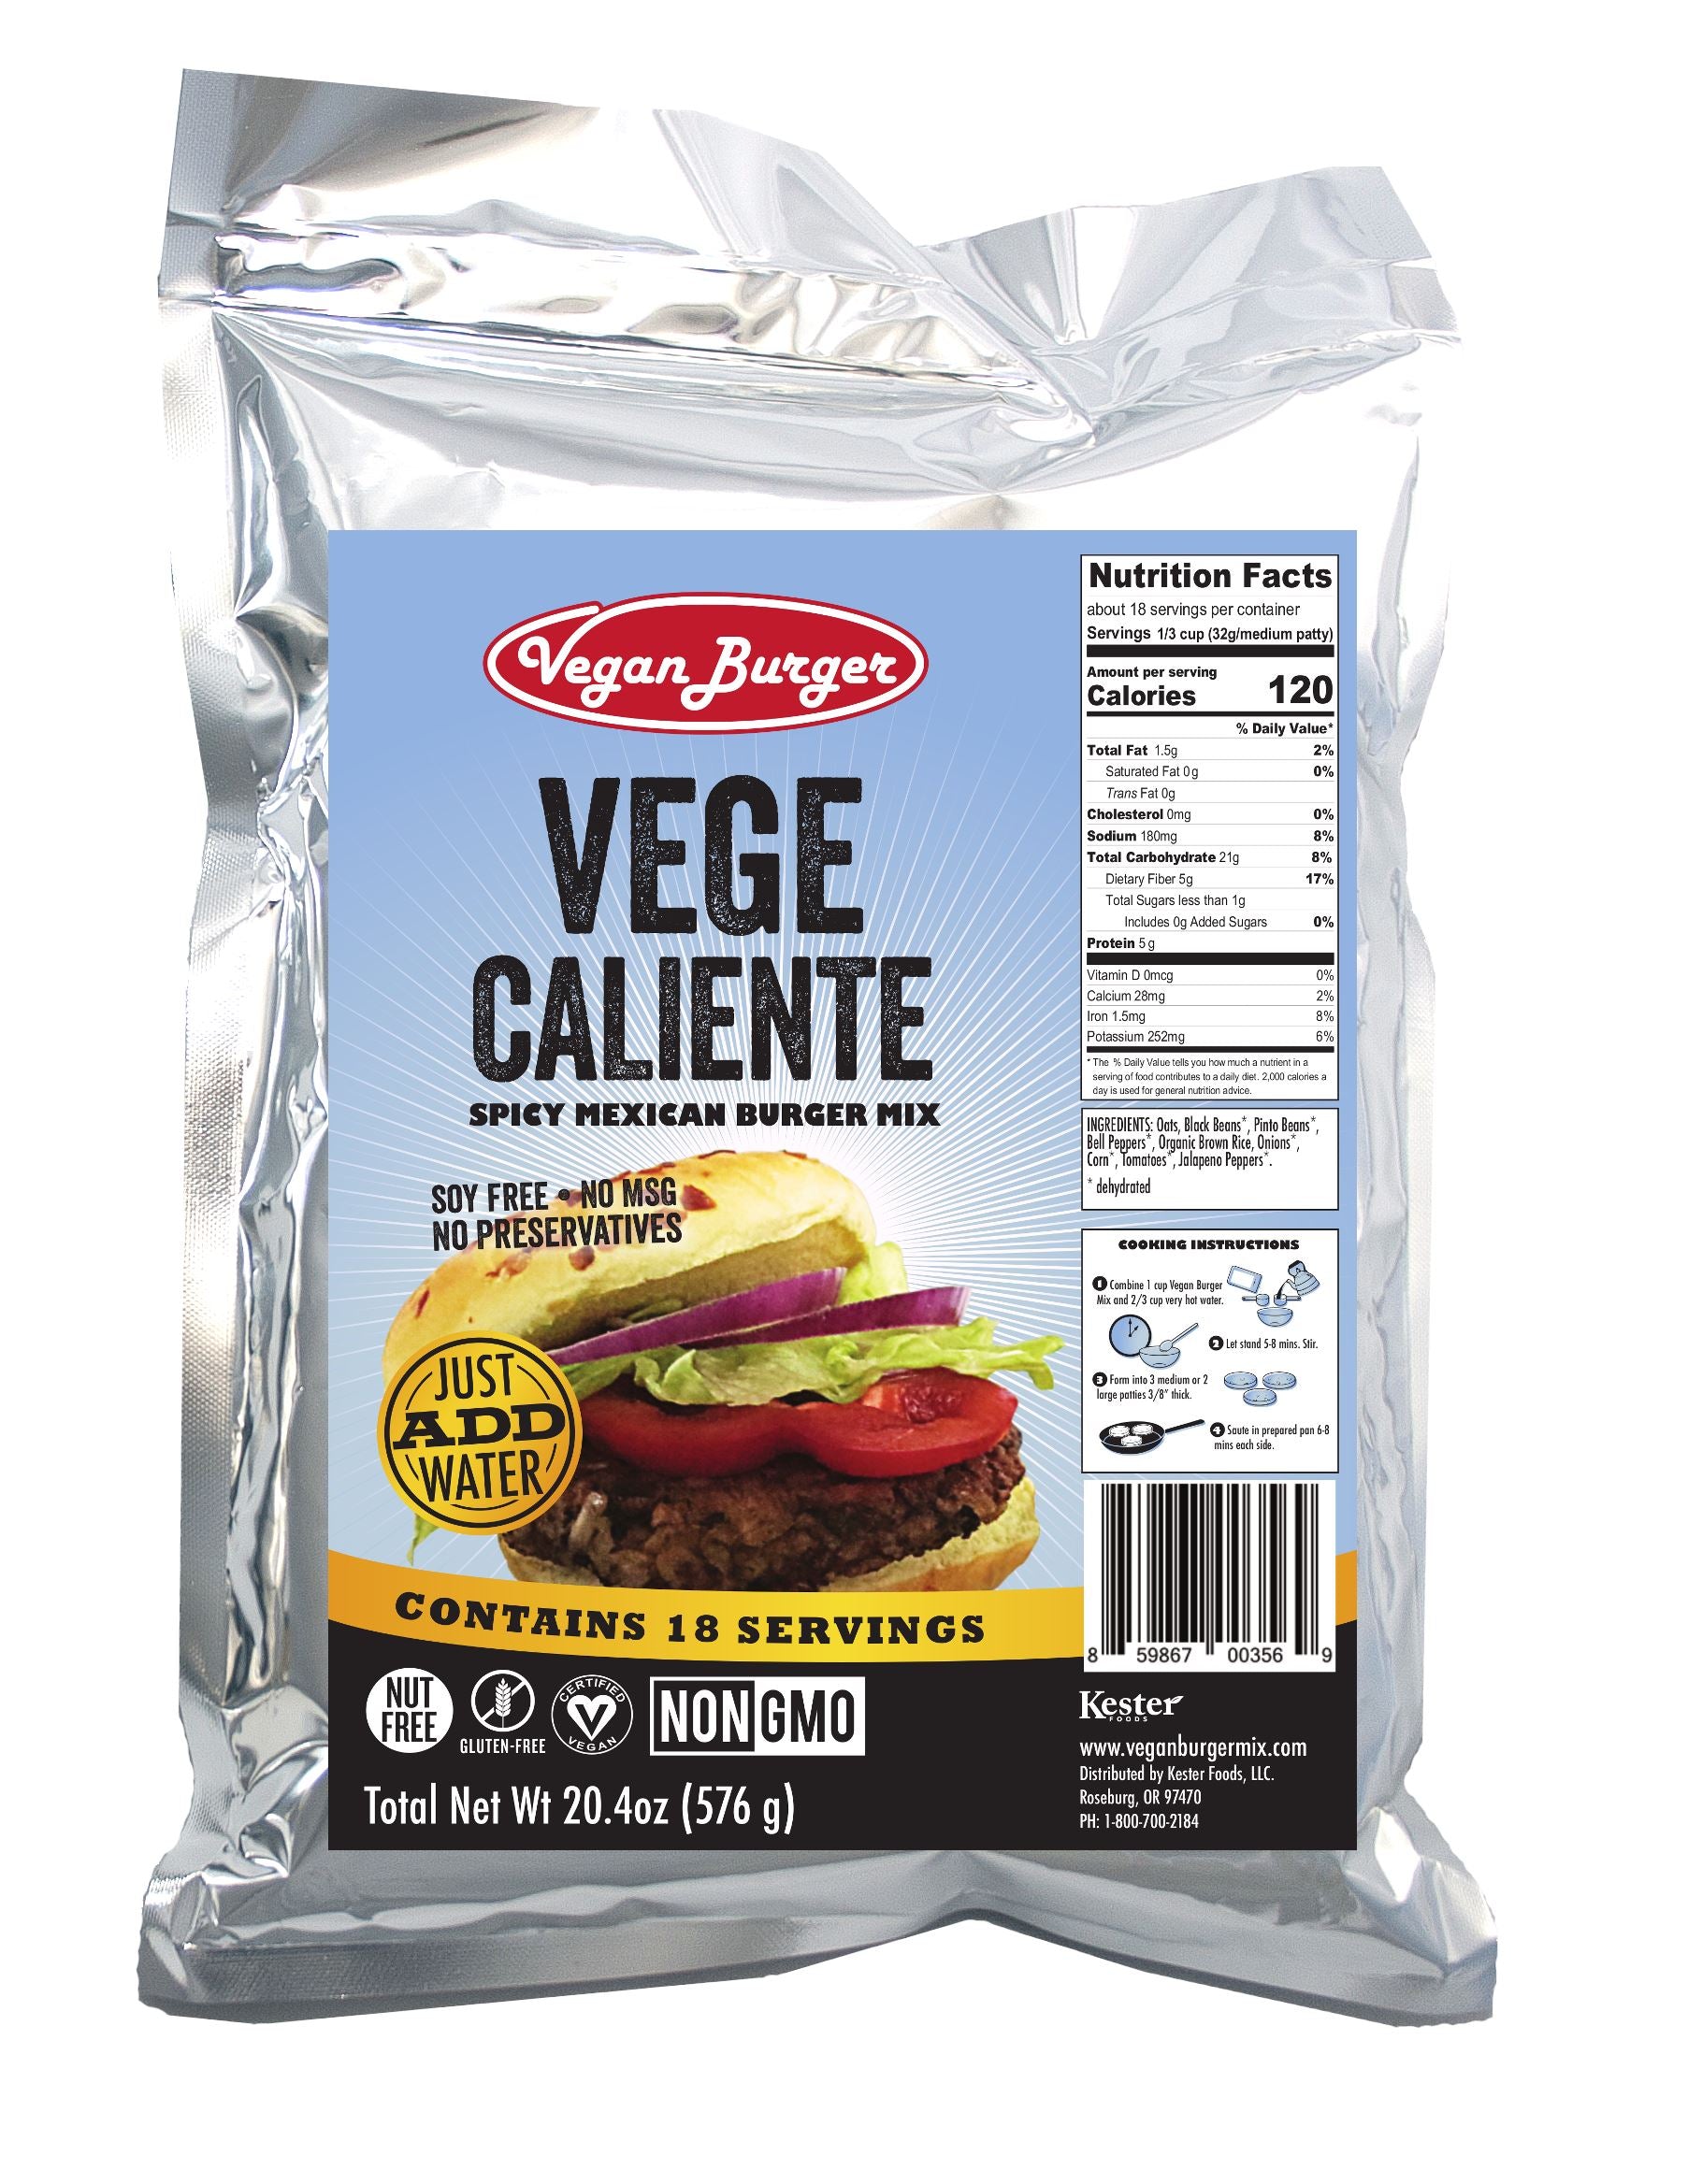 Vegan Burger - Vege Caliente (18-servings)